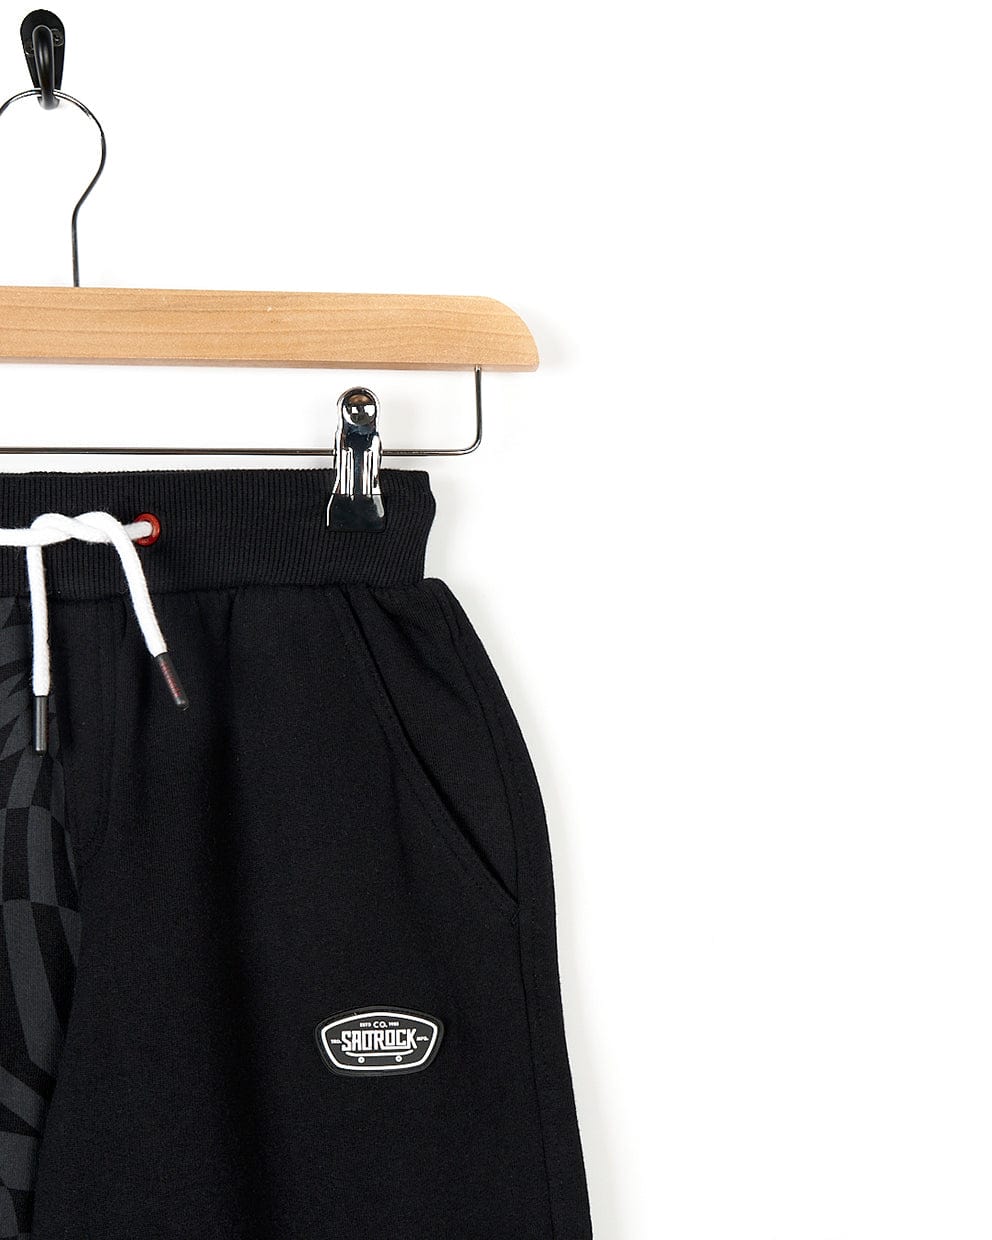 Stylish black Saltrock Rip It - Kids Jogging Bottom sweat shorts, offering both comfort and style.